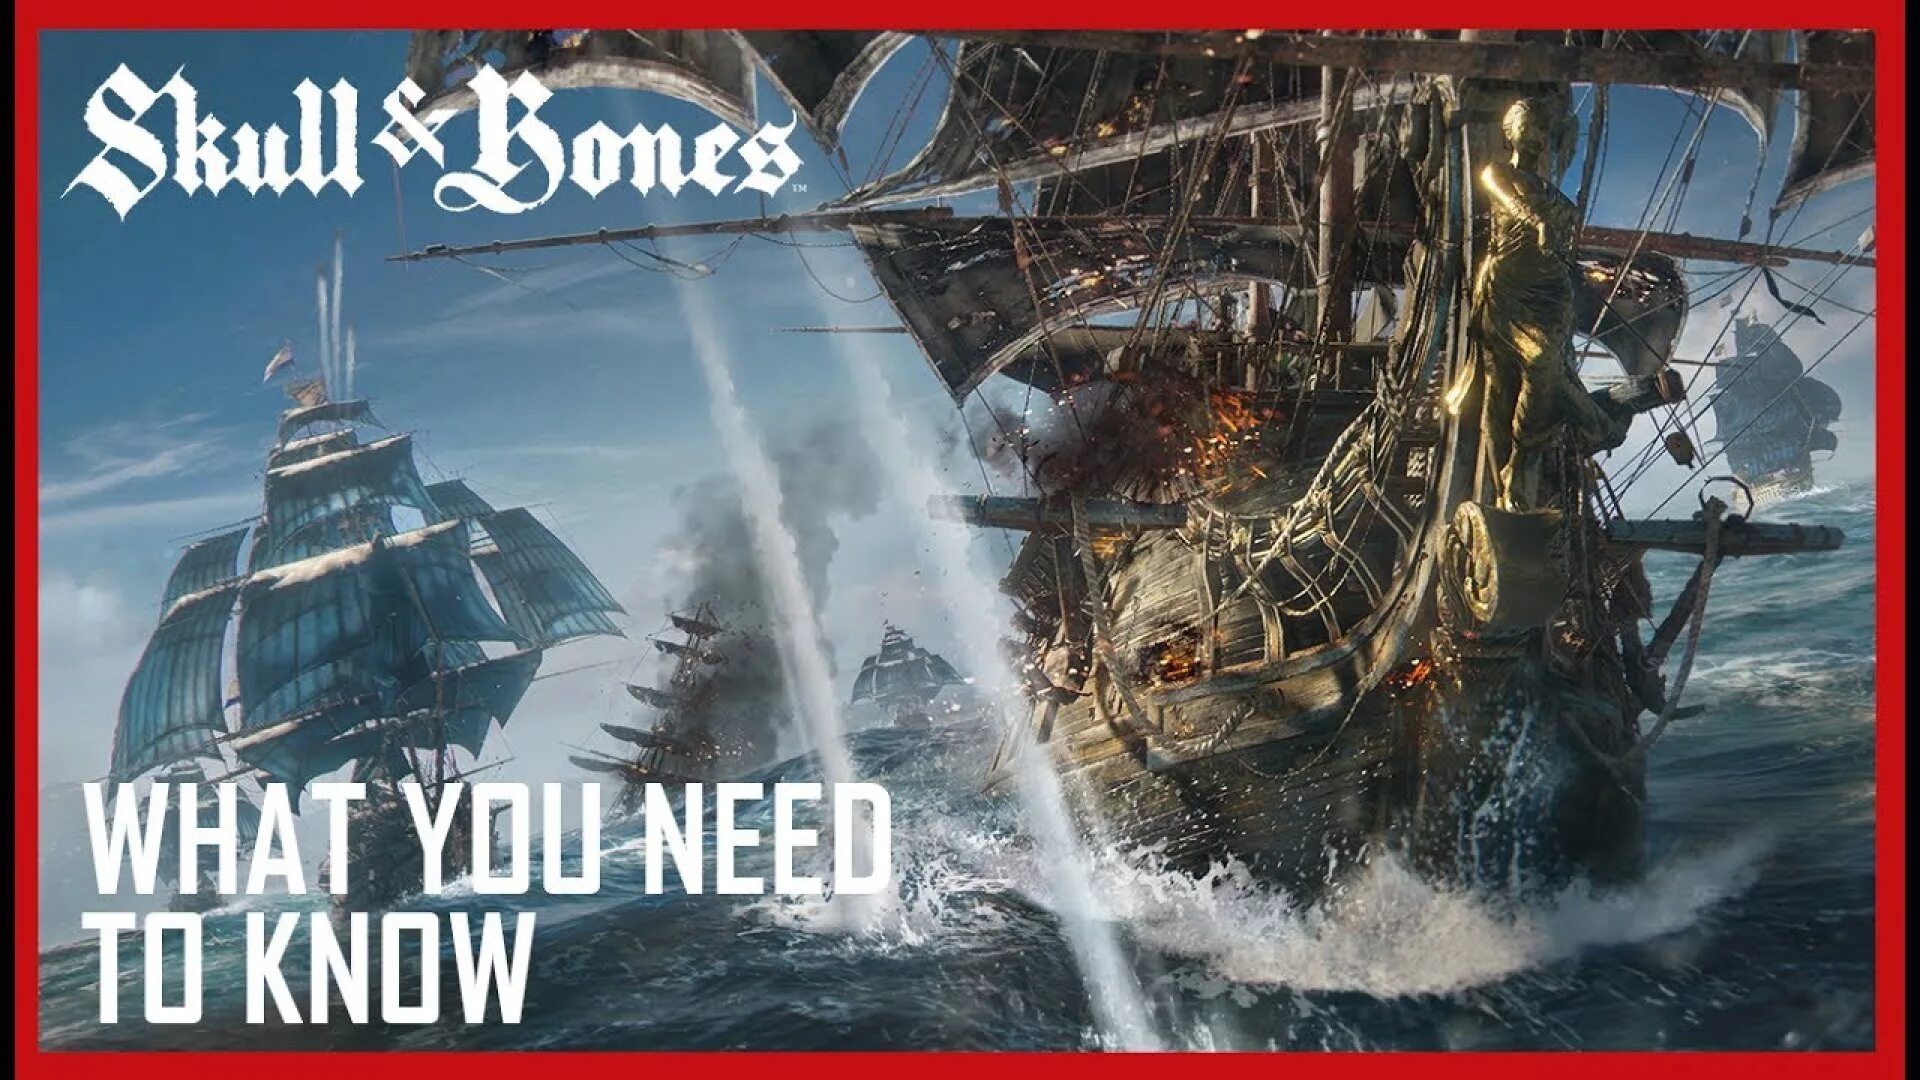 Пиратский корабль. Skull & Bones (игра). World of Sea Battle корабли. Игра “Skull & Bones” (2020).